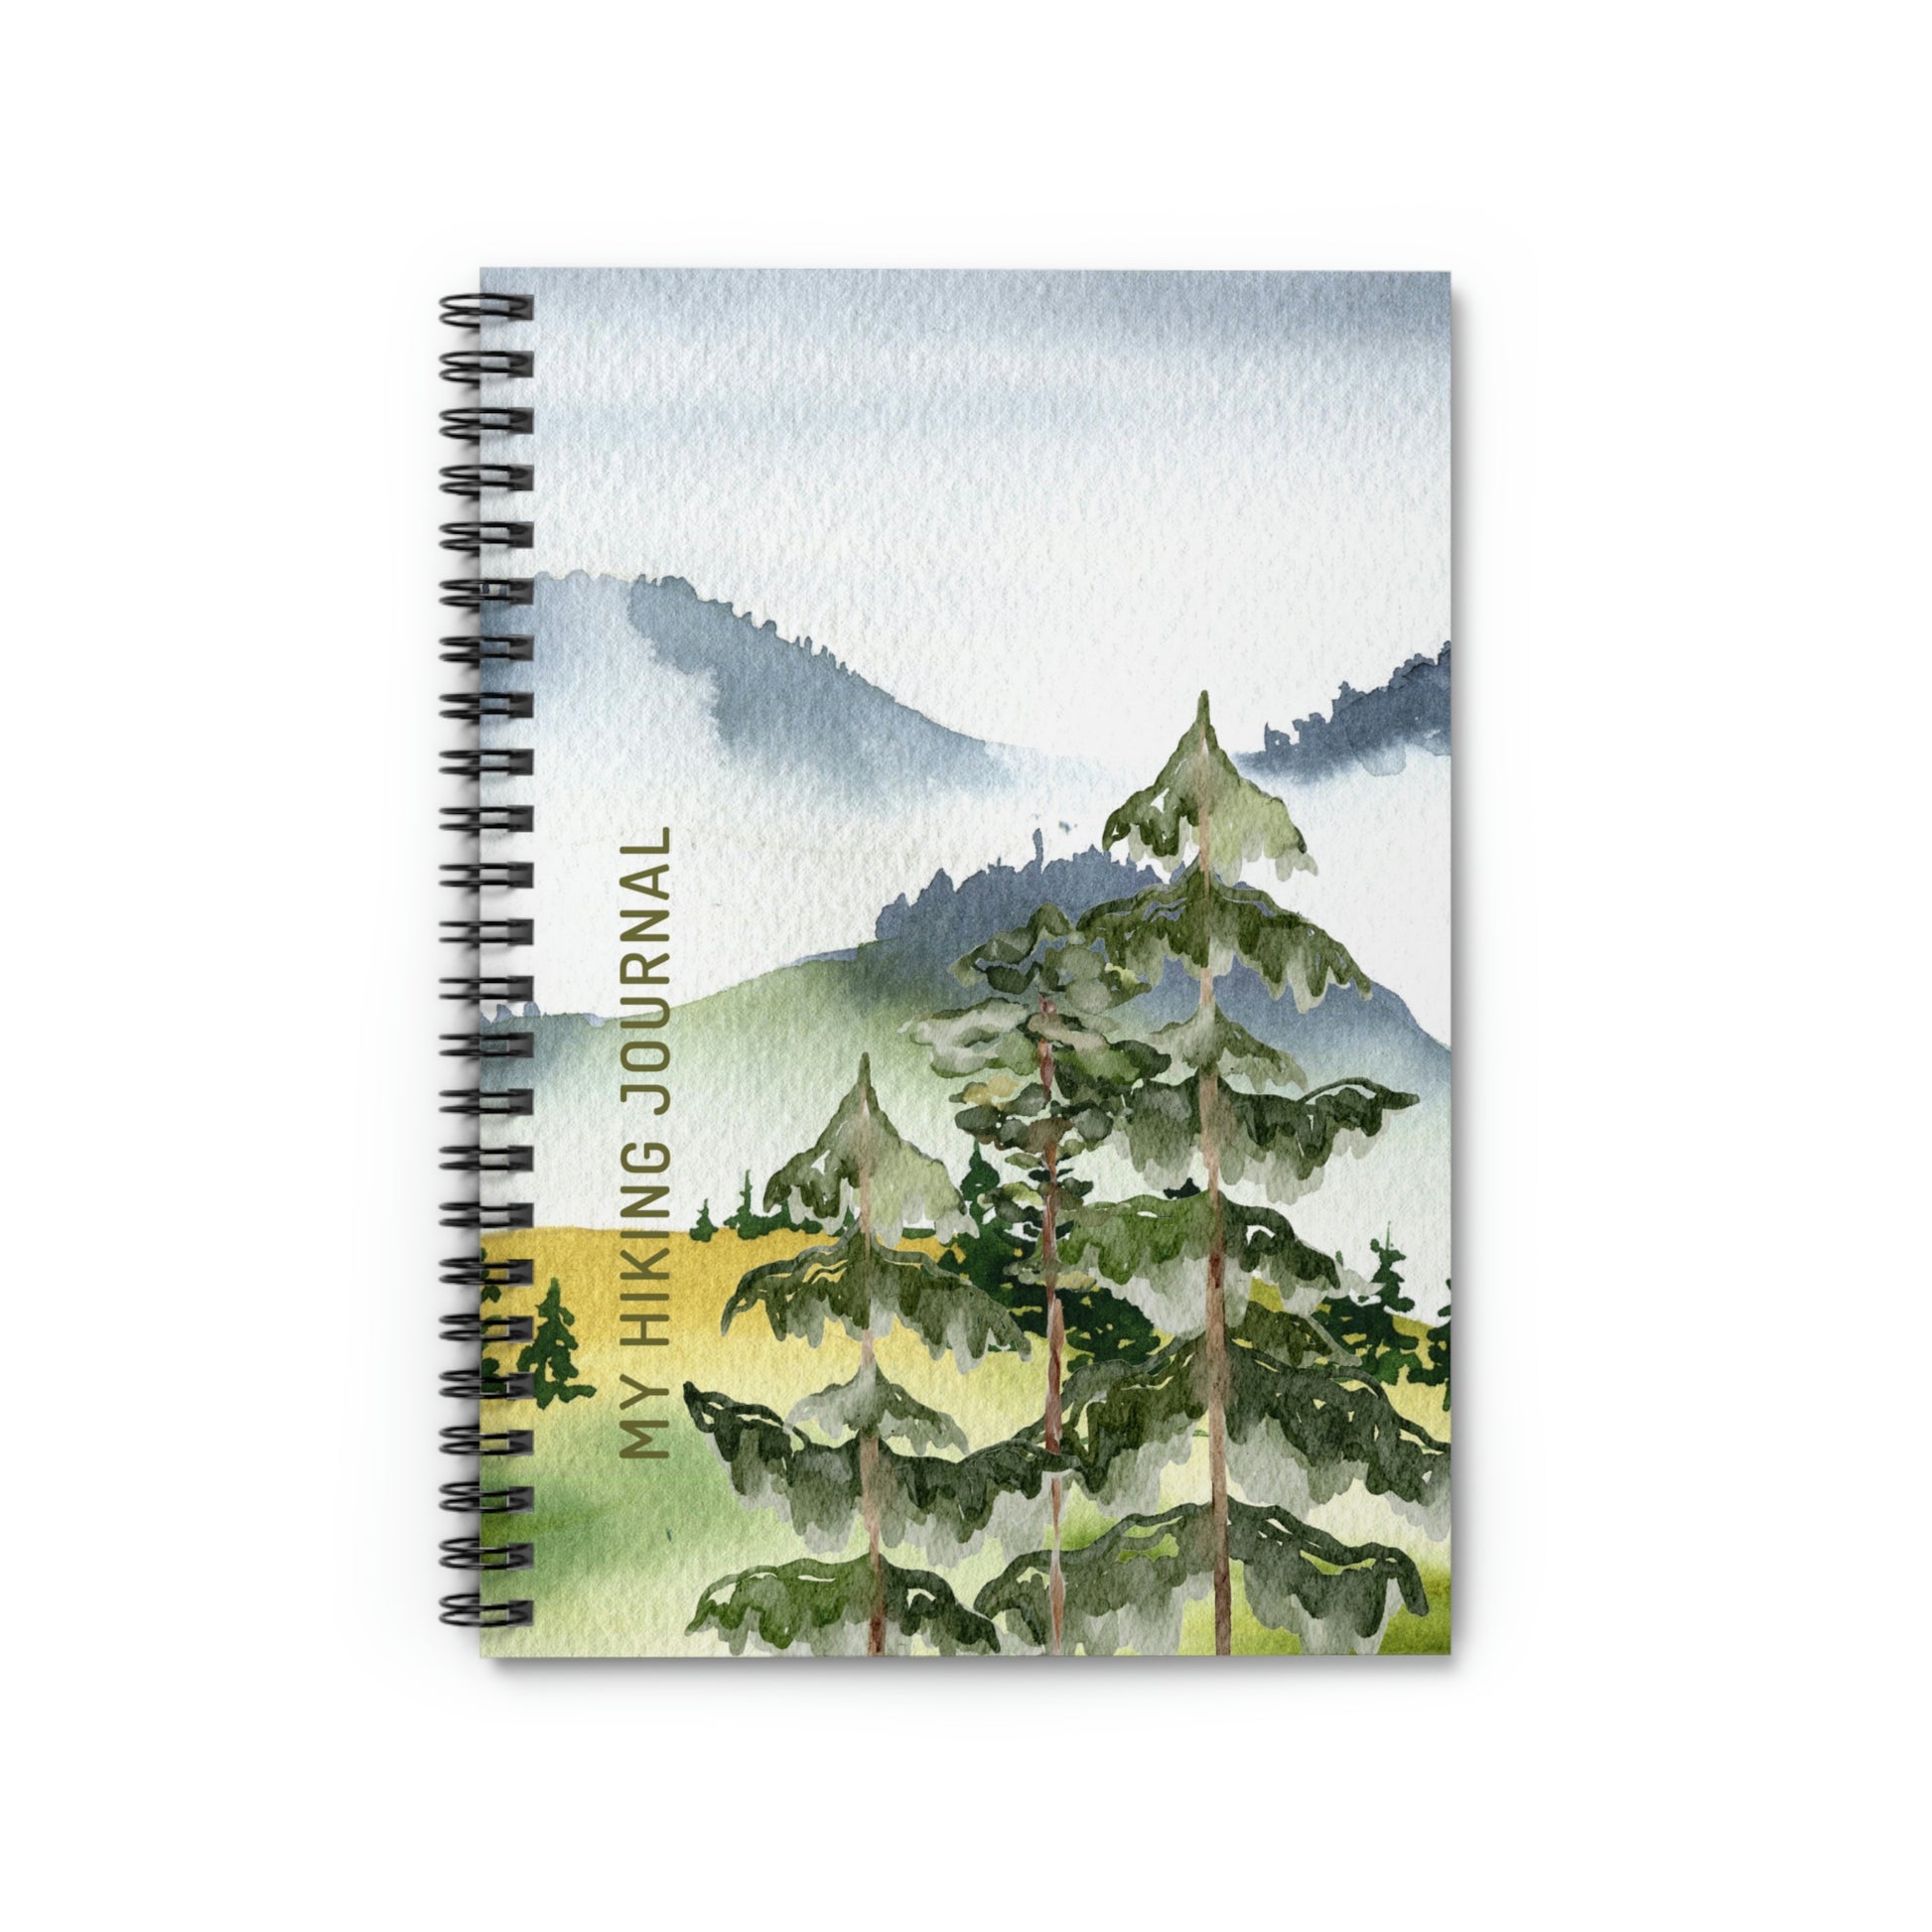 Spiral notebook, spiral notebook for hiking log, hiking log notebook, notebook for hikers, my hiking journal, hiking log, gifts for hikers, hiking gifts